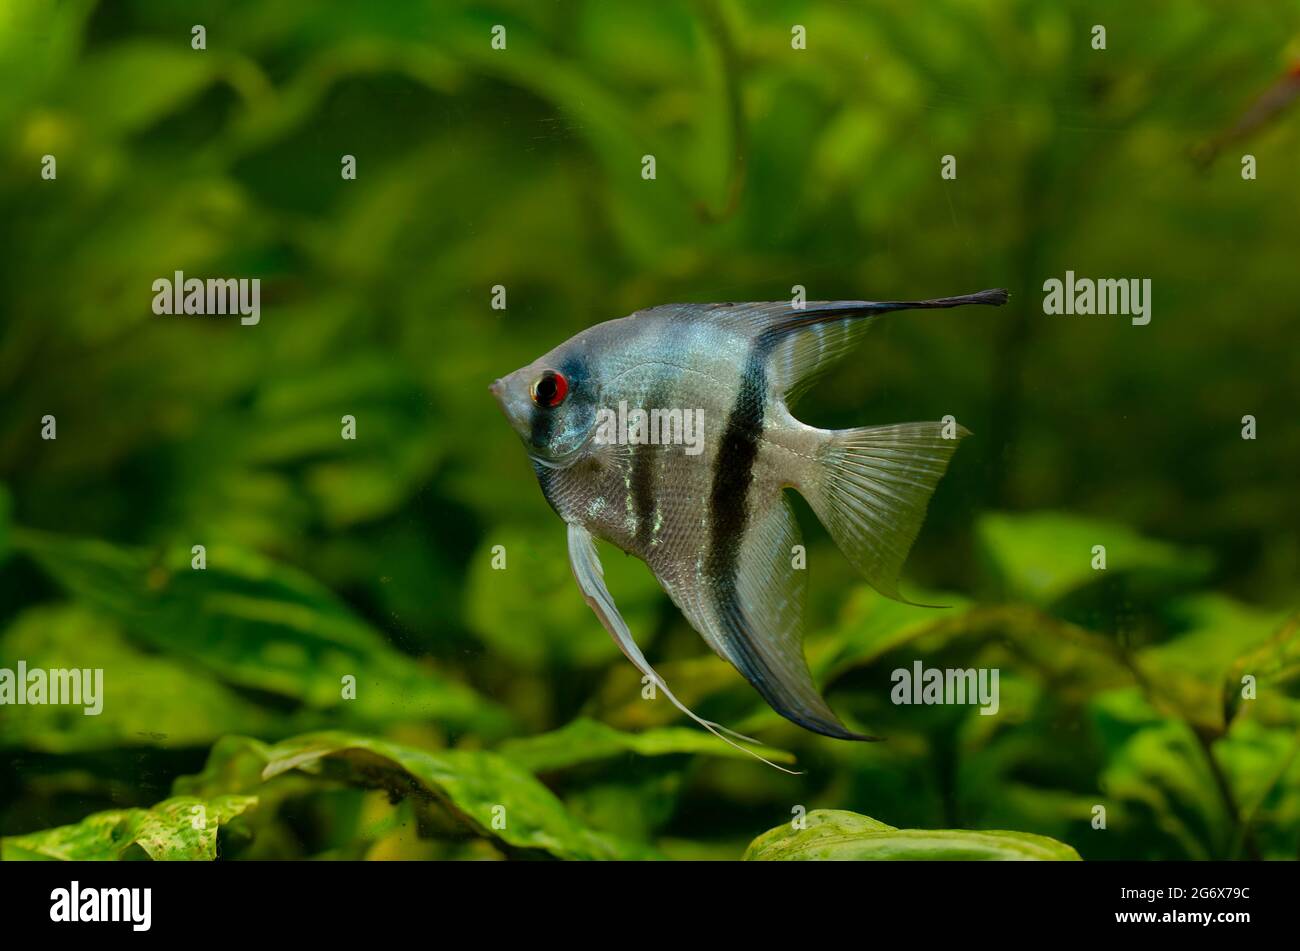 Ornamental fish Scalaria or angelfish Pterophyllum scalare in close-up Stock Photo